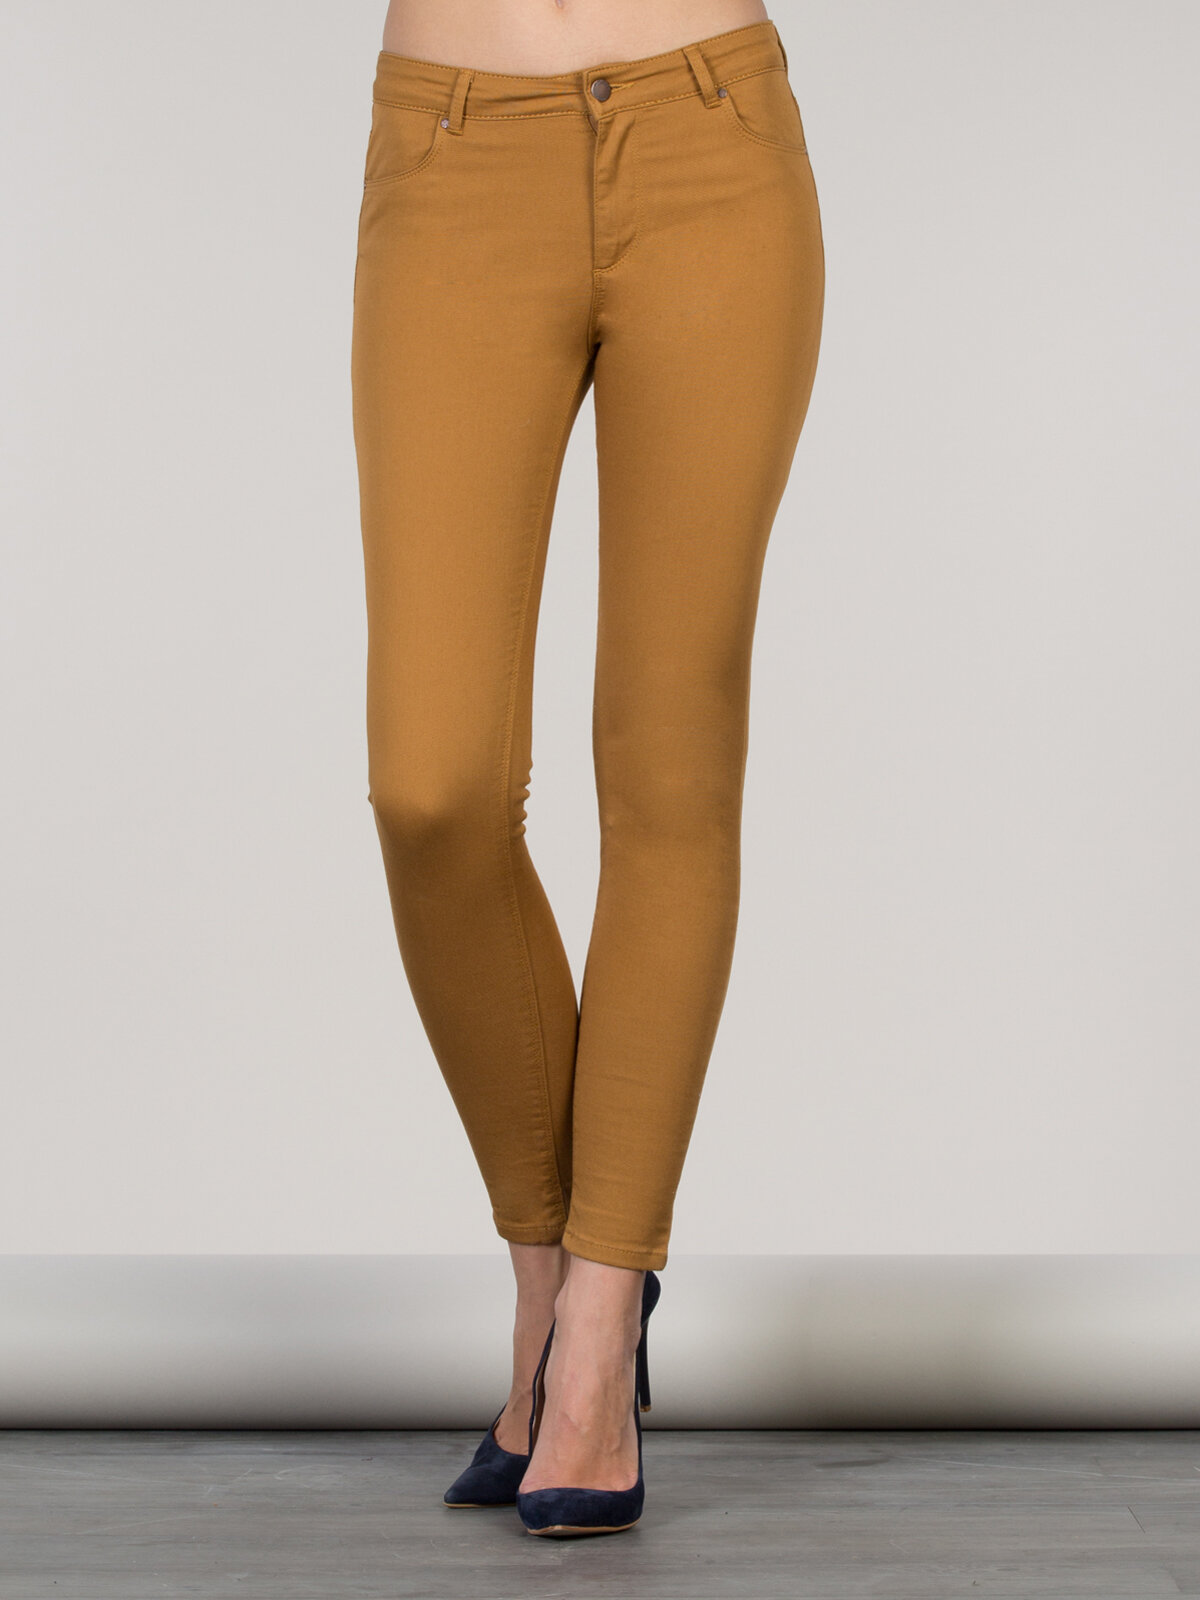 Colins Super Slim Fit Orta Bel Skinny Leg Kadın Safran Pantolon. 1